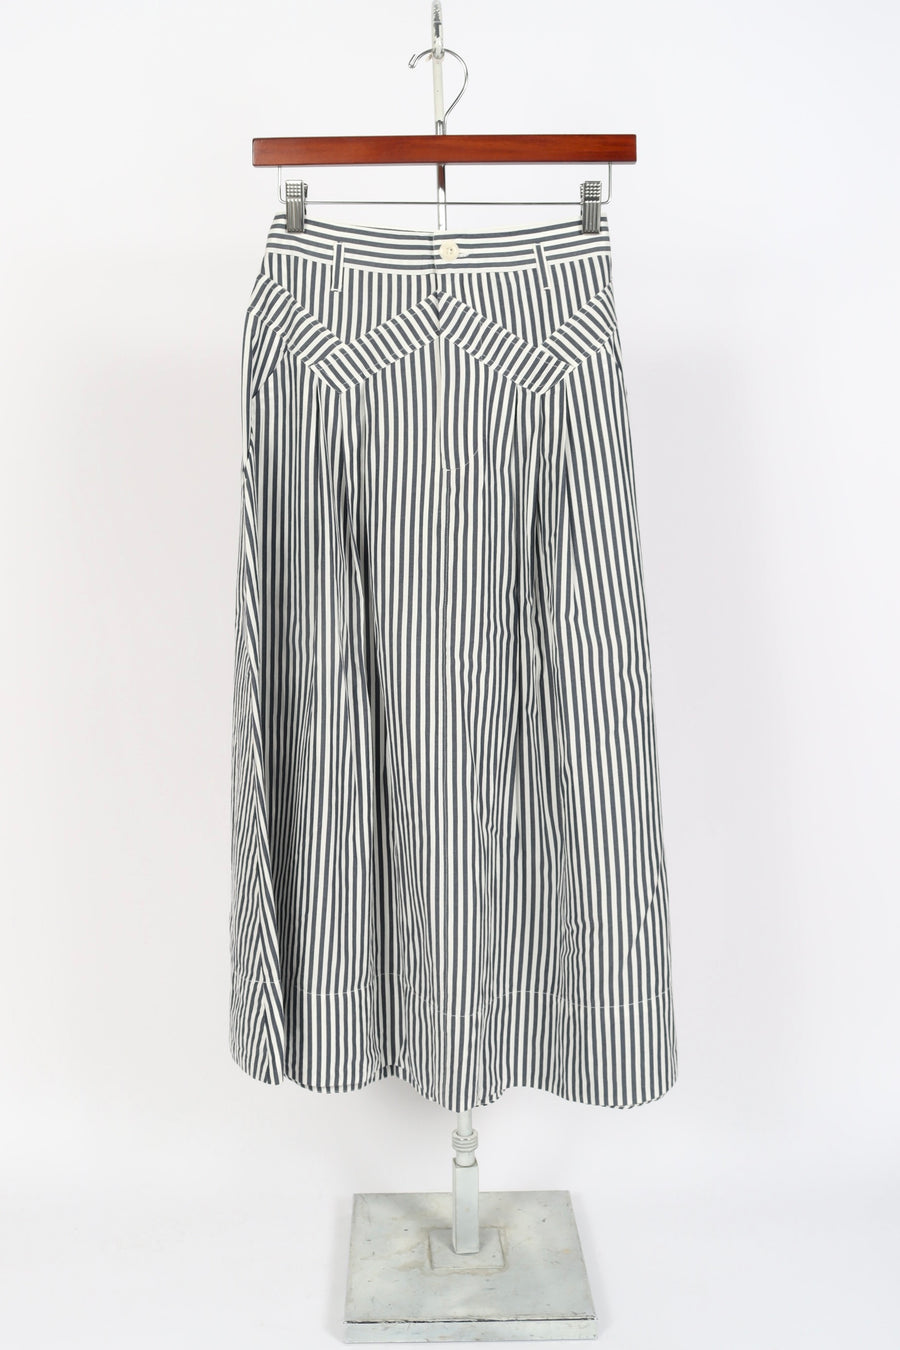 The Field Skirt - Navy Studio Stripe